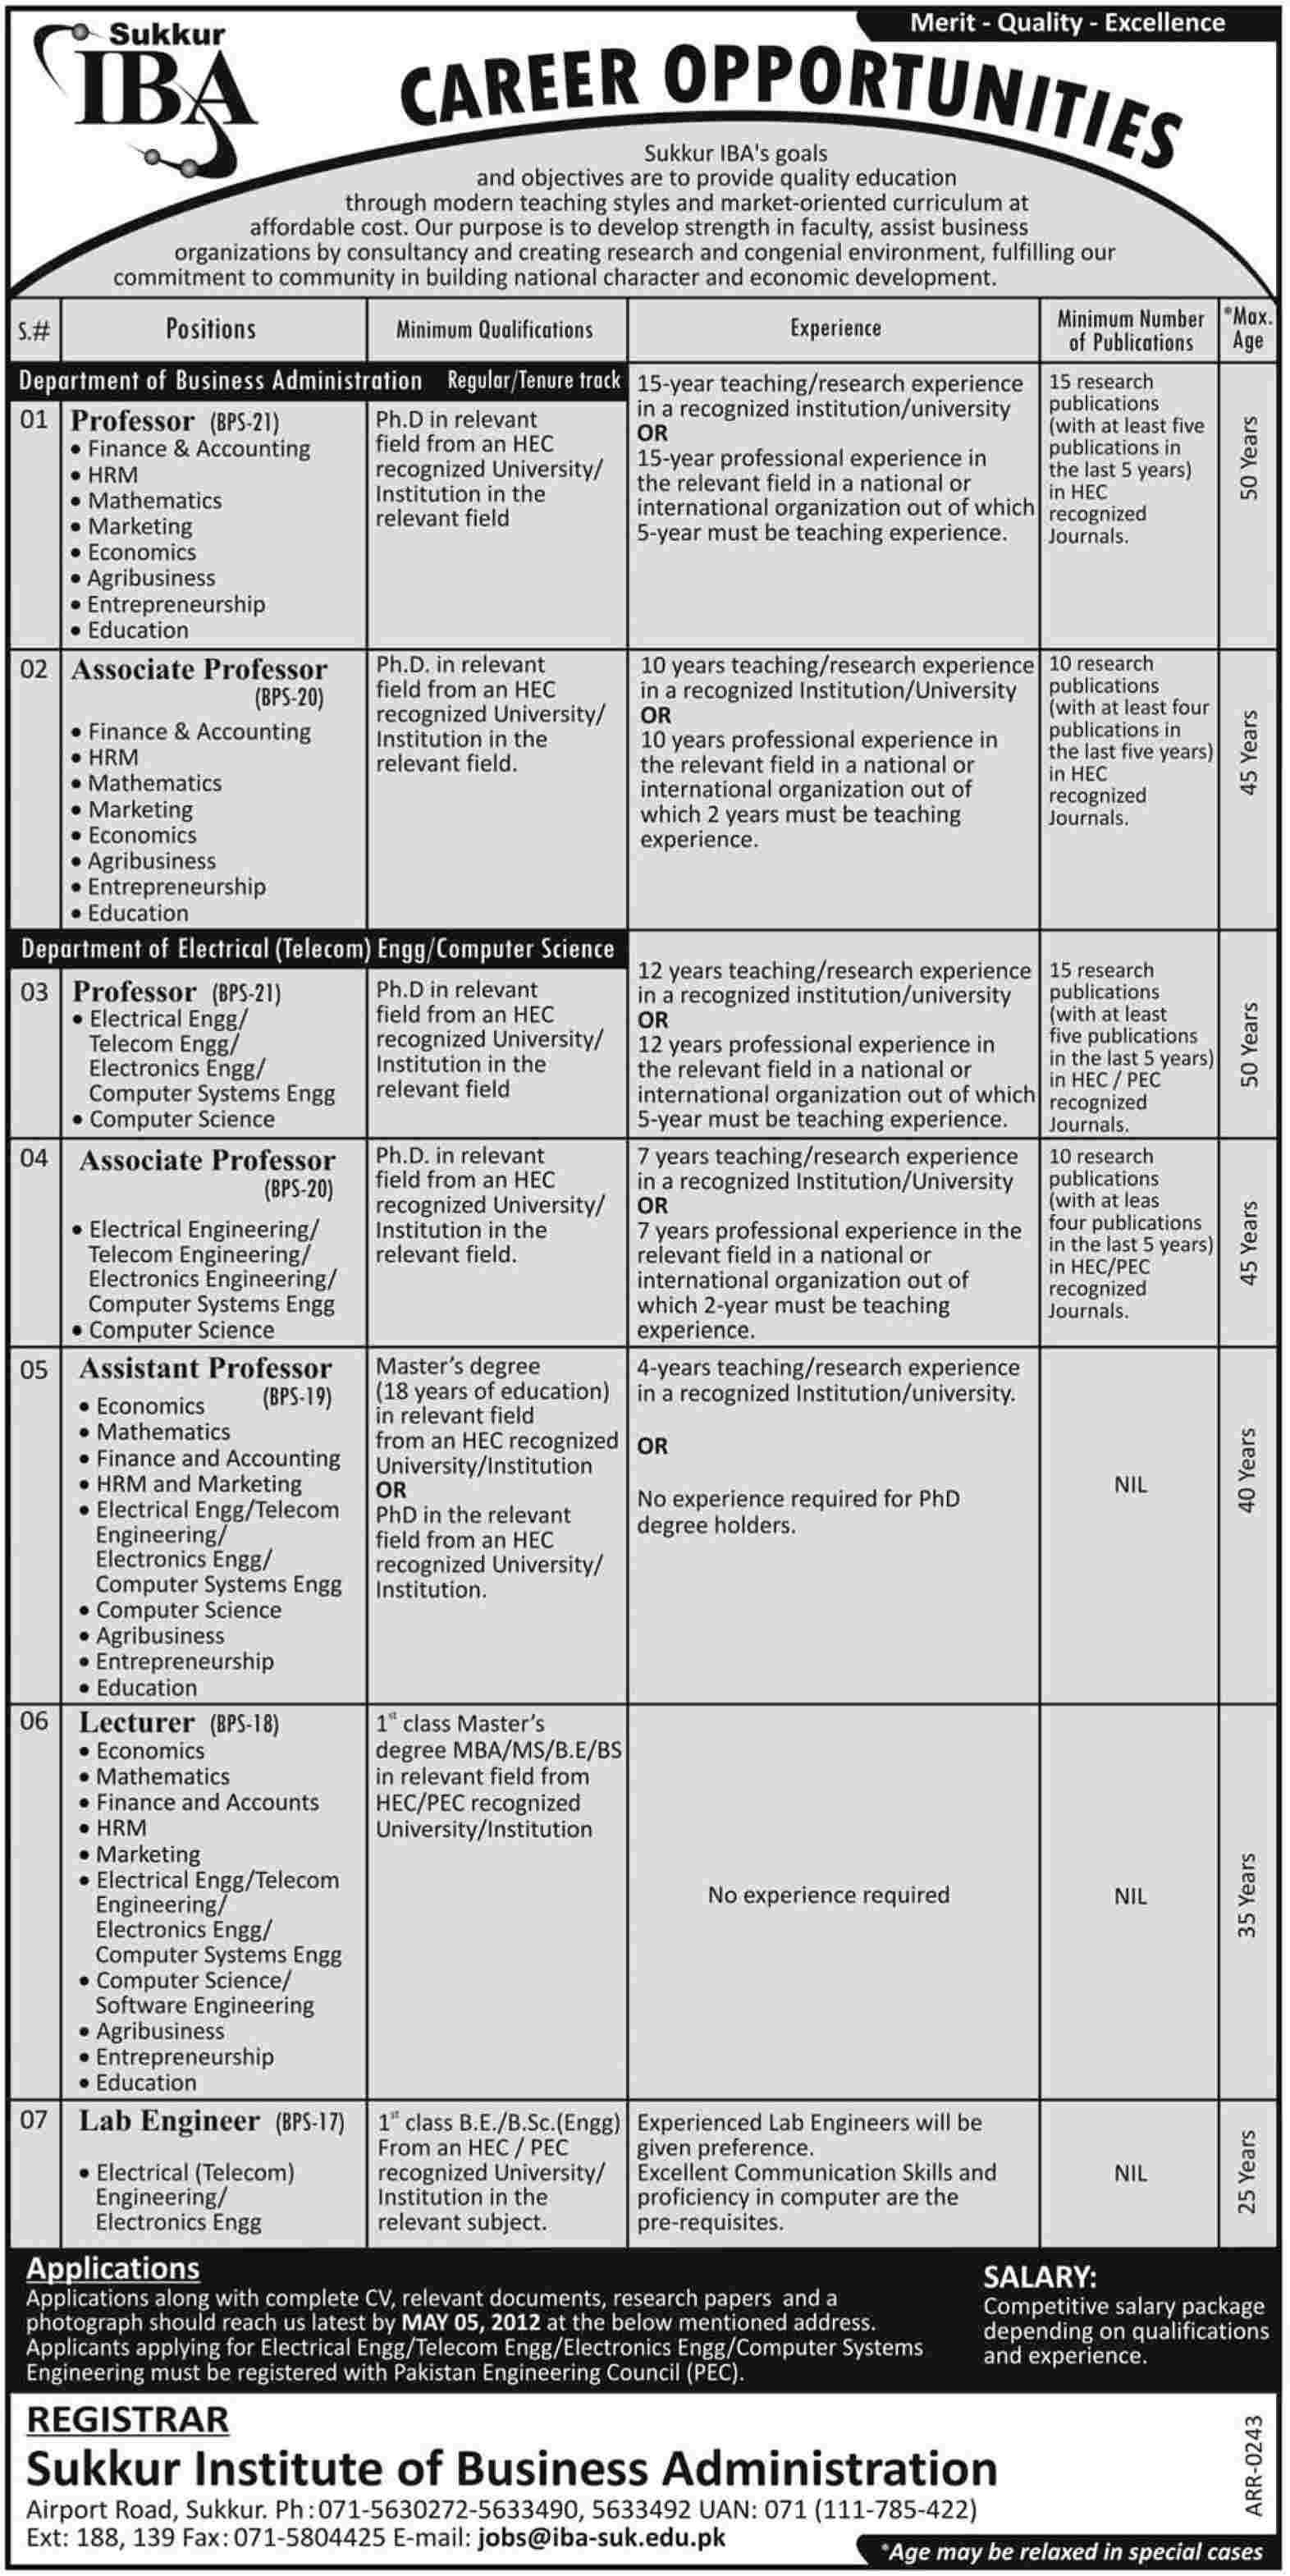 Sukkur IBA (Institute of Business Administration) Govt. Jobs